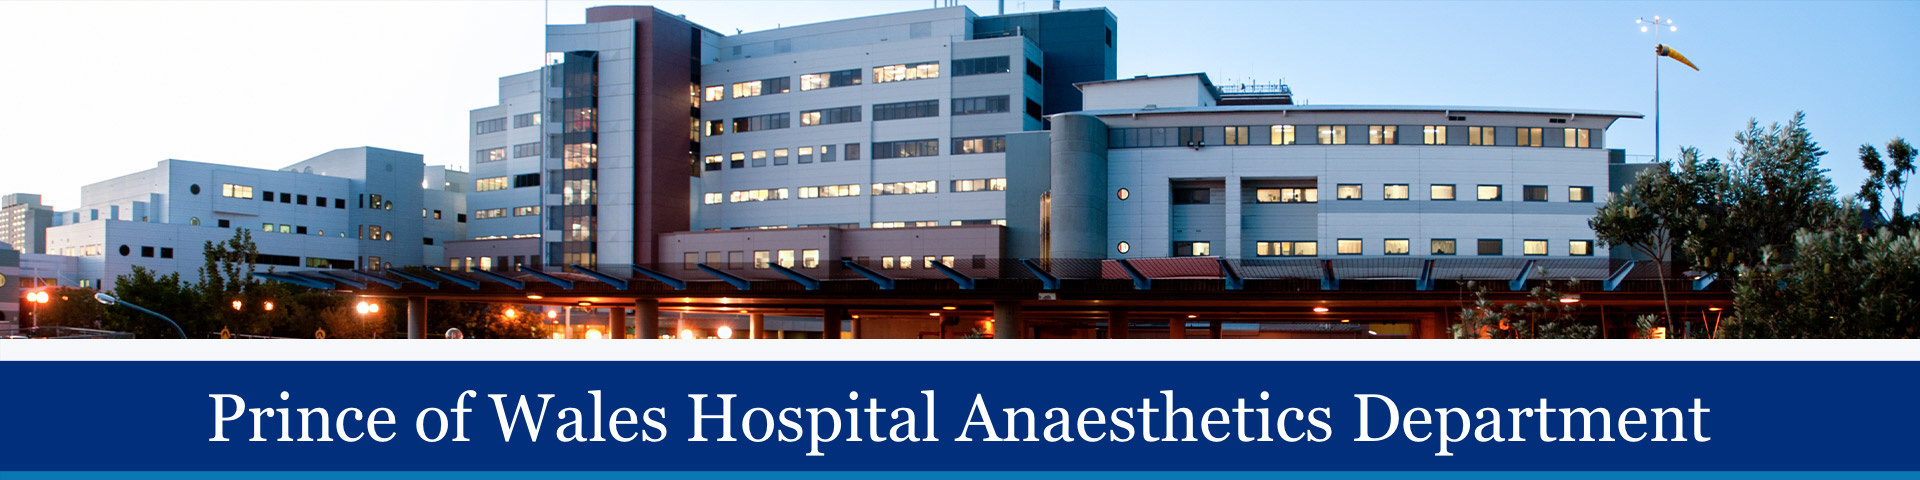 POWH Anaesthetics Department